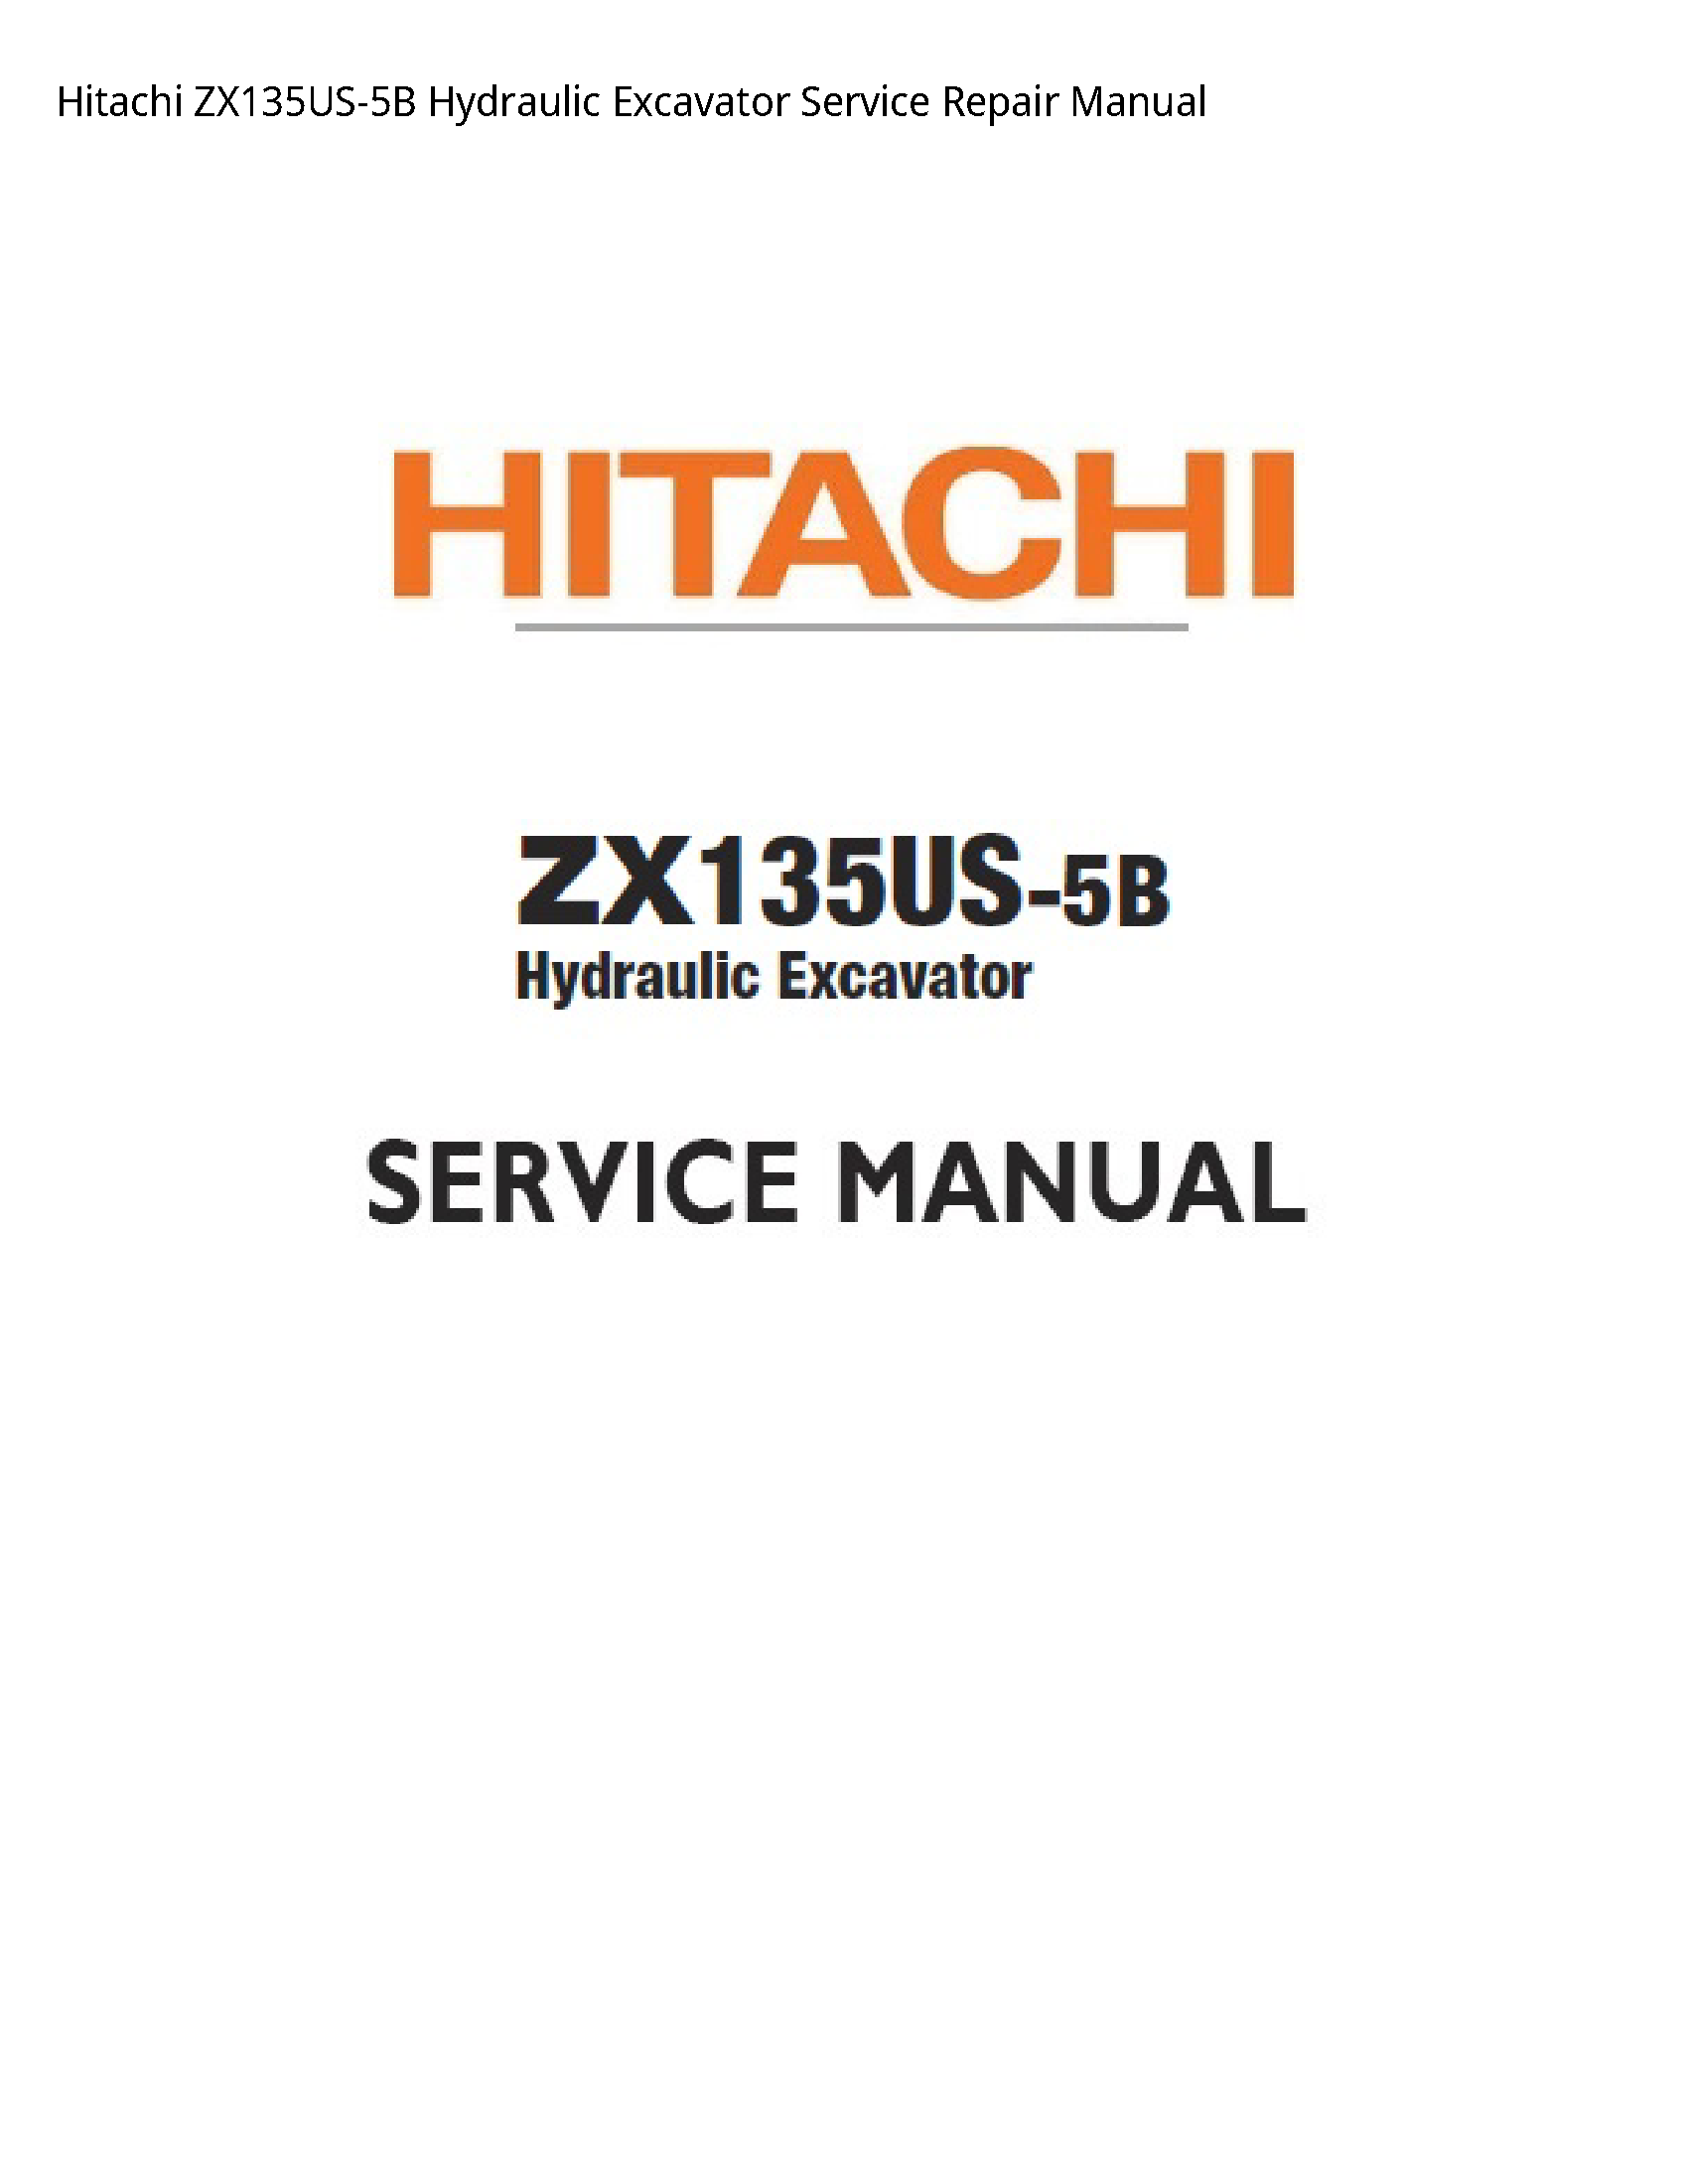 Hitachi ZX135US-5B Hydraulic Excavator manual